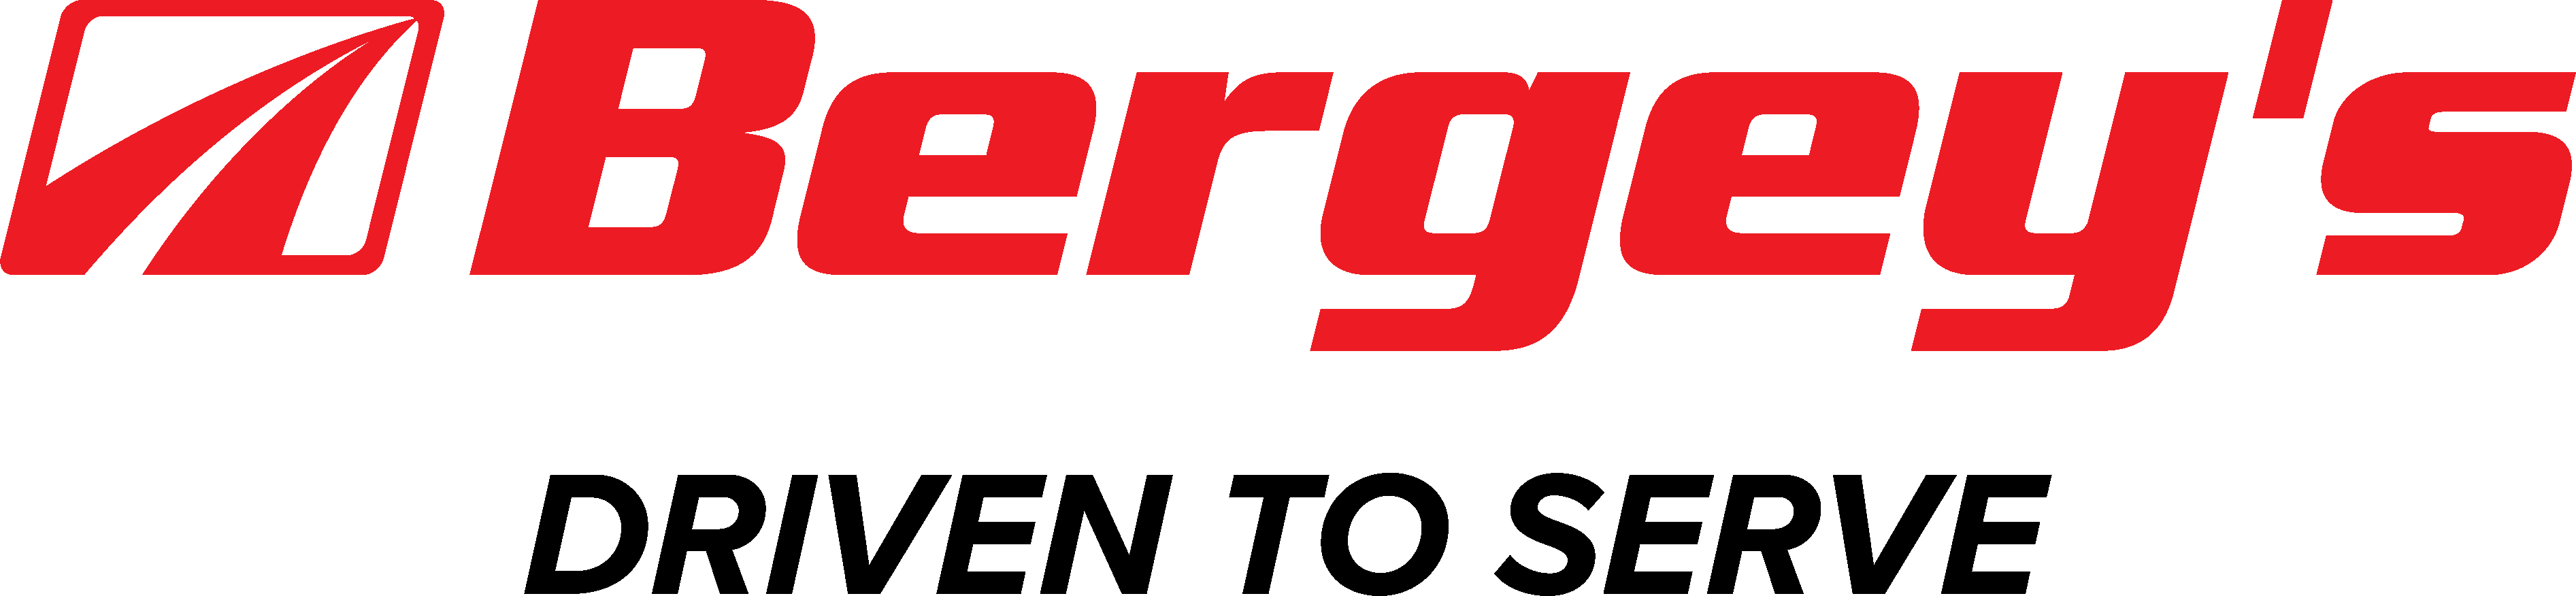 Bergey's Chevrolet logo